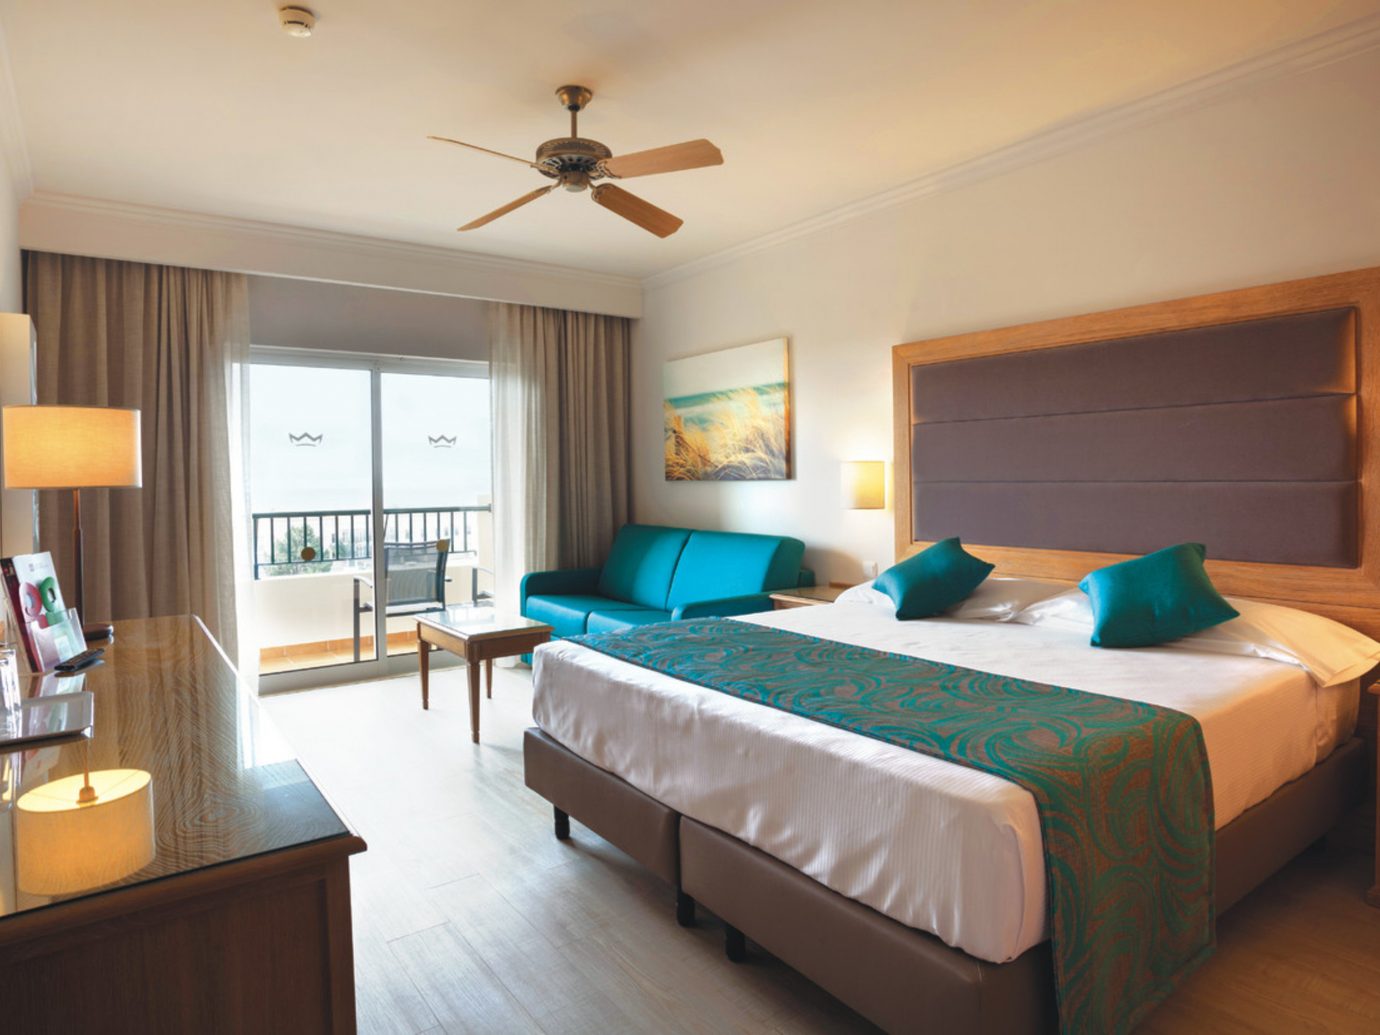 All-Inclusive Resorts Hotels floor indoor wall ceiling bed Bedroom room Suite interior design real estate hotel green estate Resort area furniture